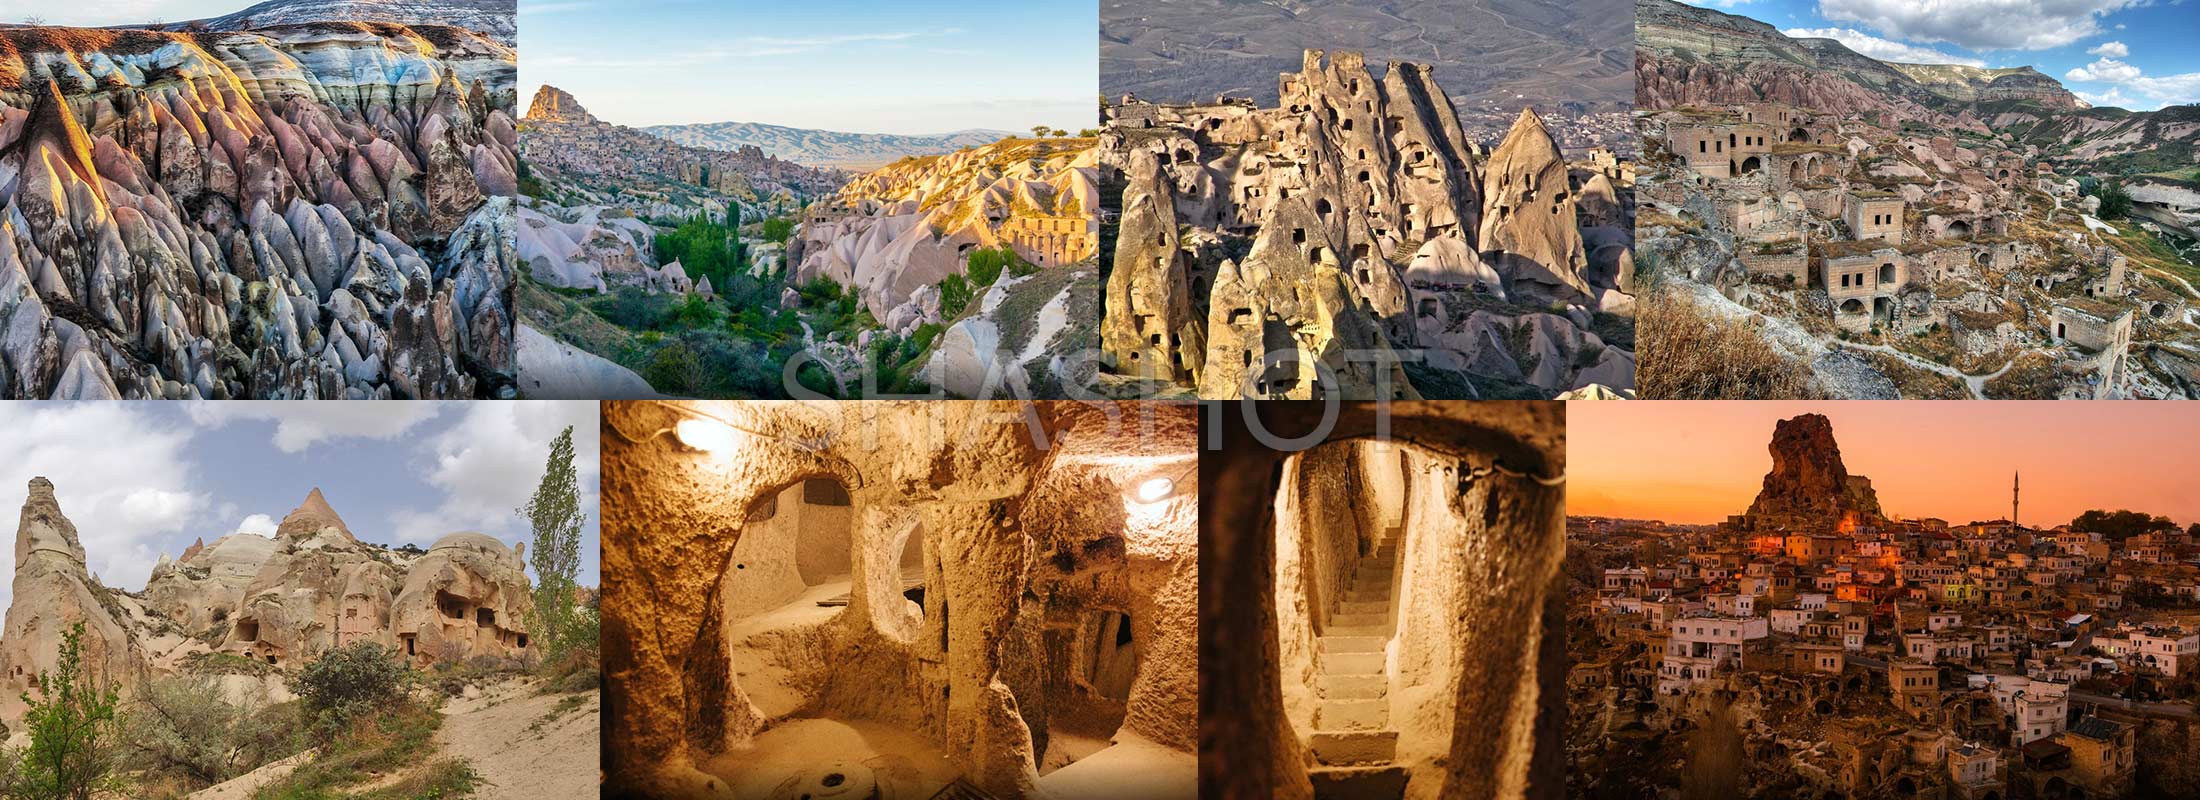 cappadocia-turquia-shashot-travel-Tour-a-pie